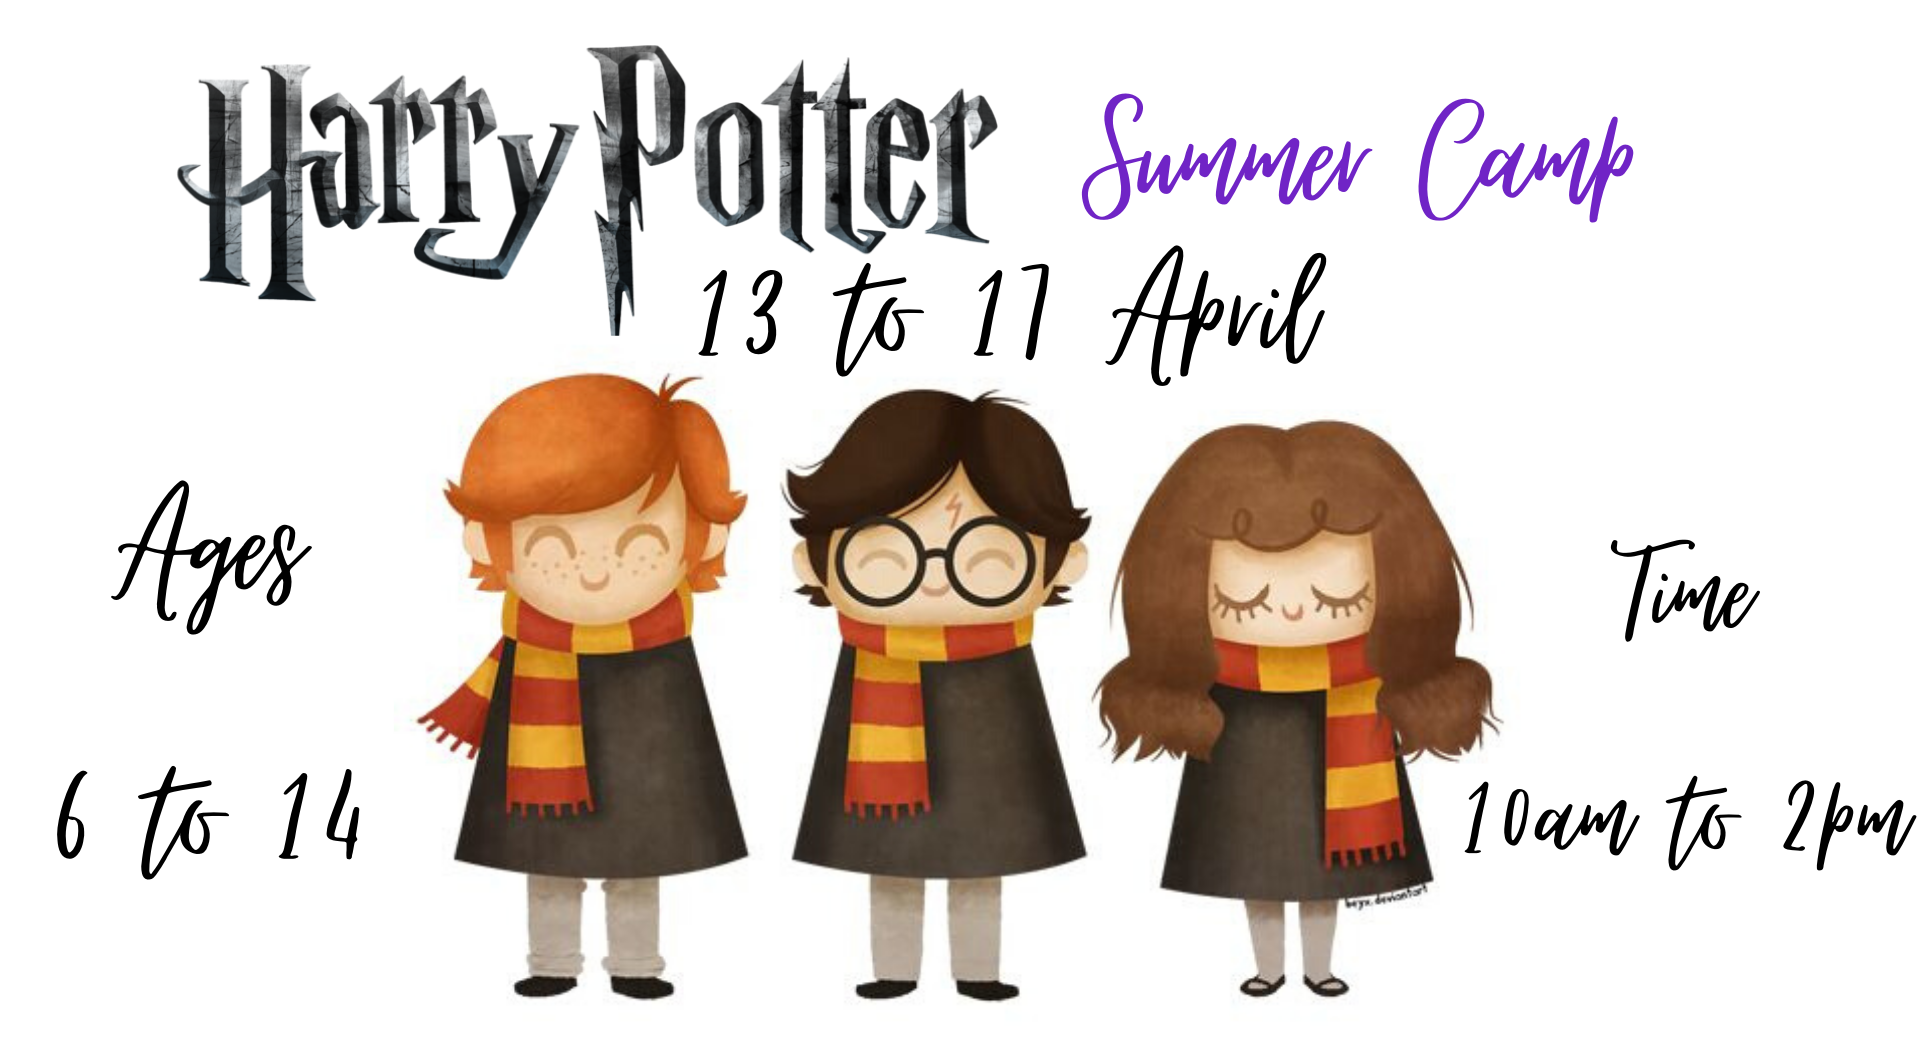 Harry Potter Summer Camp!